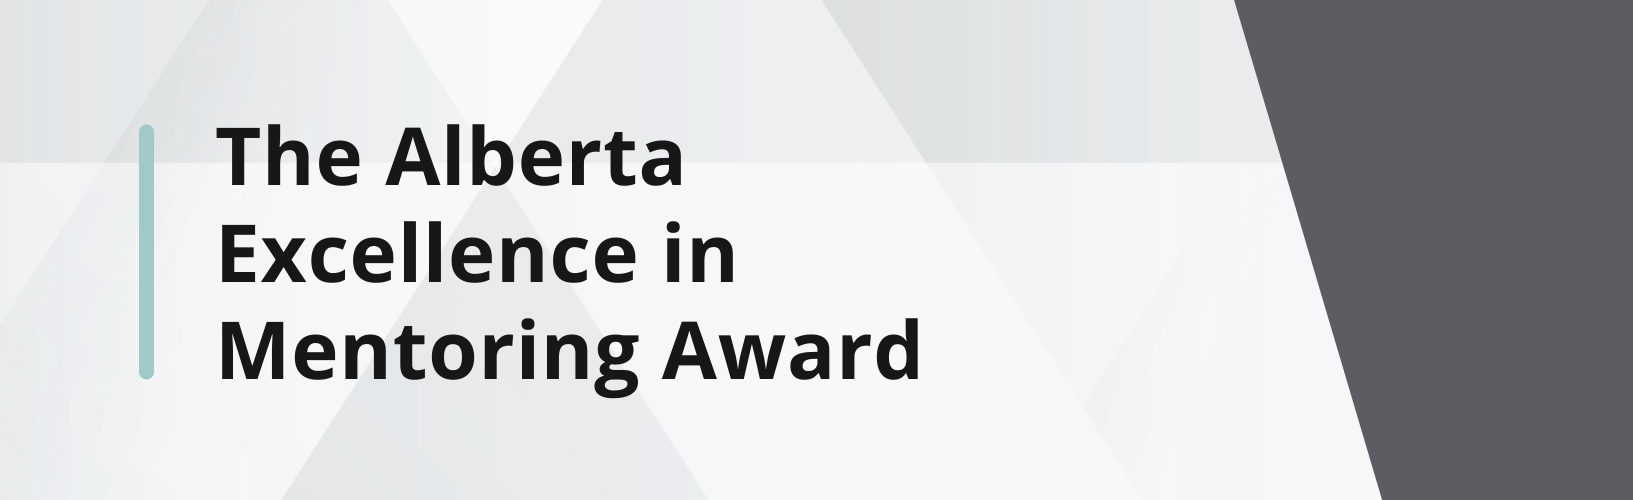 The Alberta Excellence in Mentoring Award